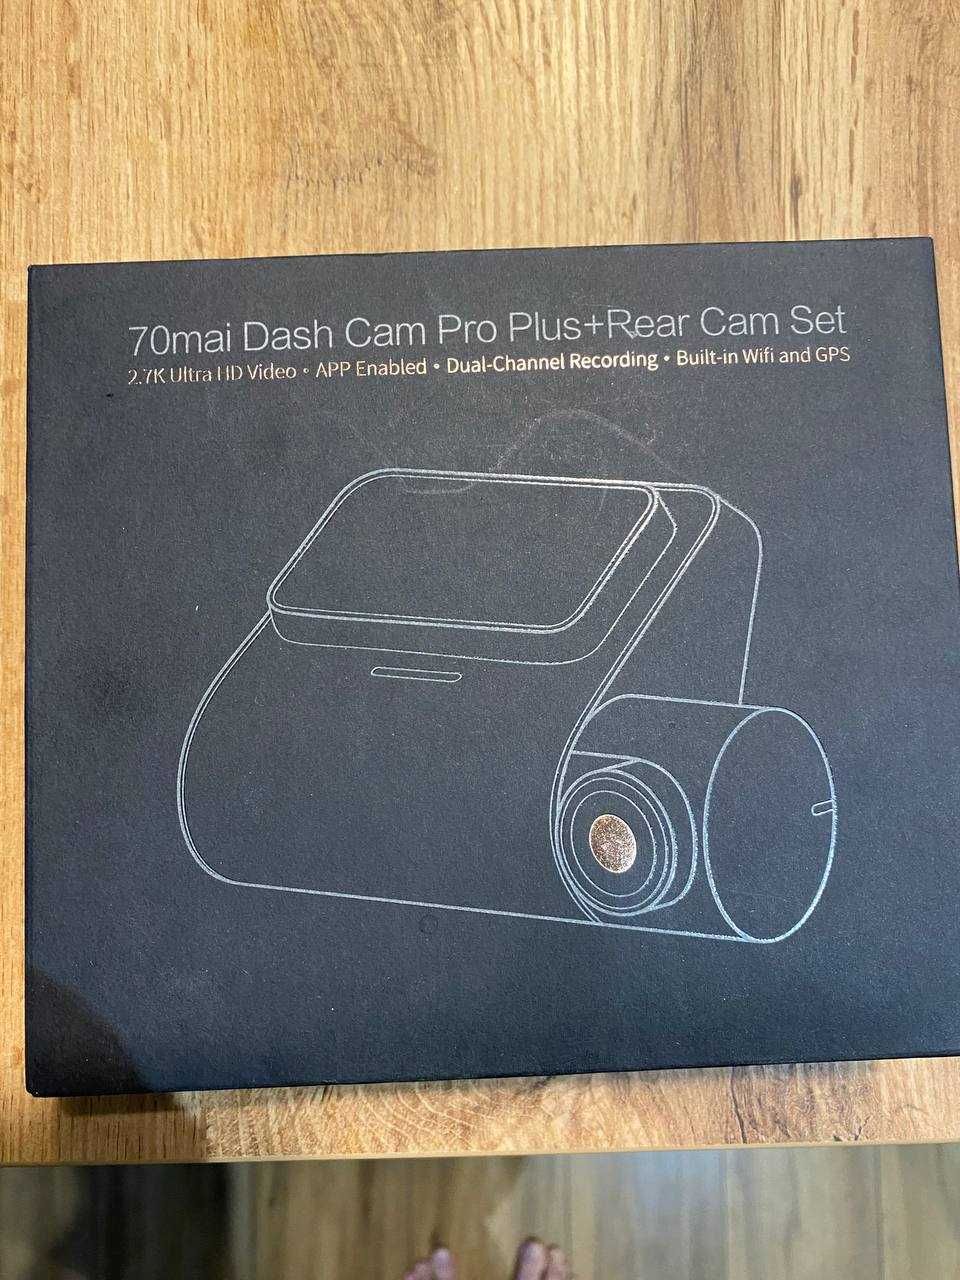 70mai dash cam pro plus+rear cam set a500s-1